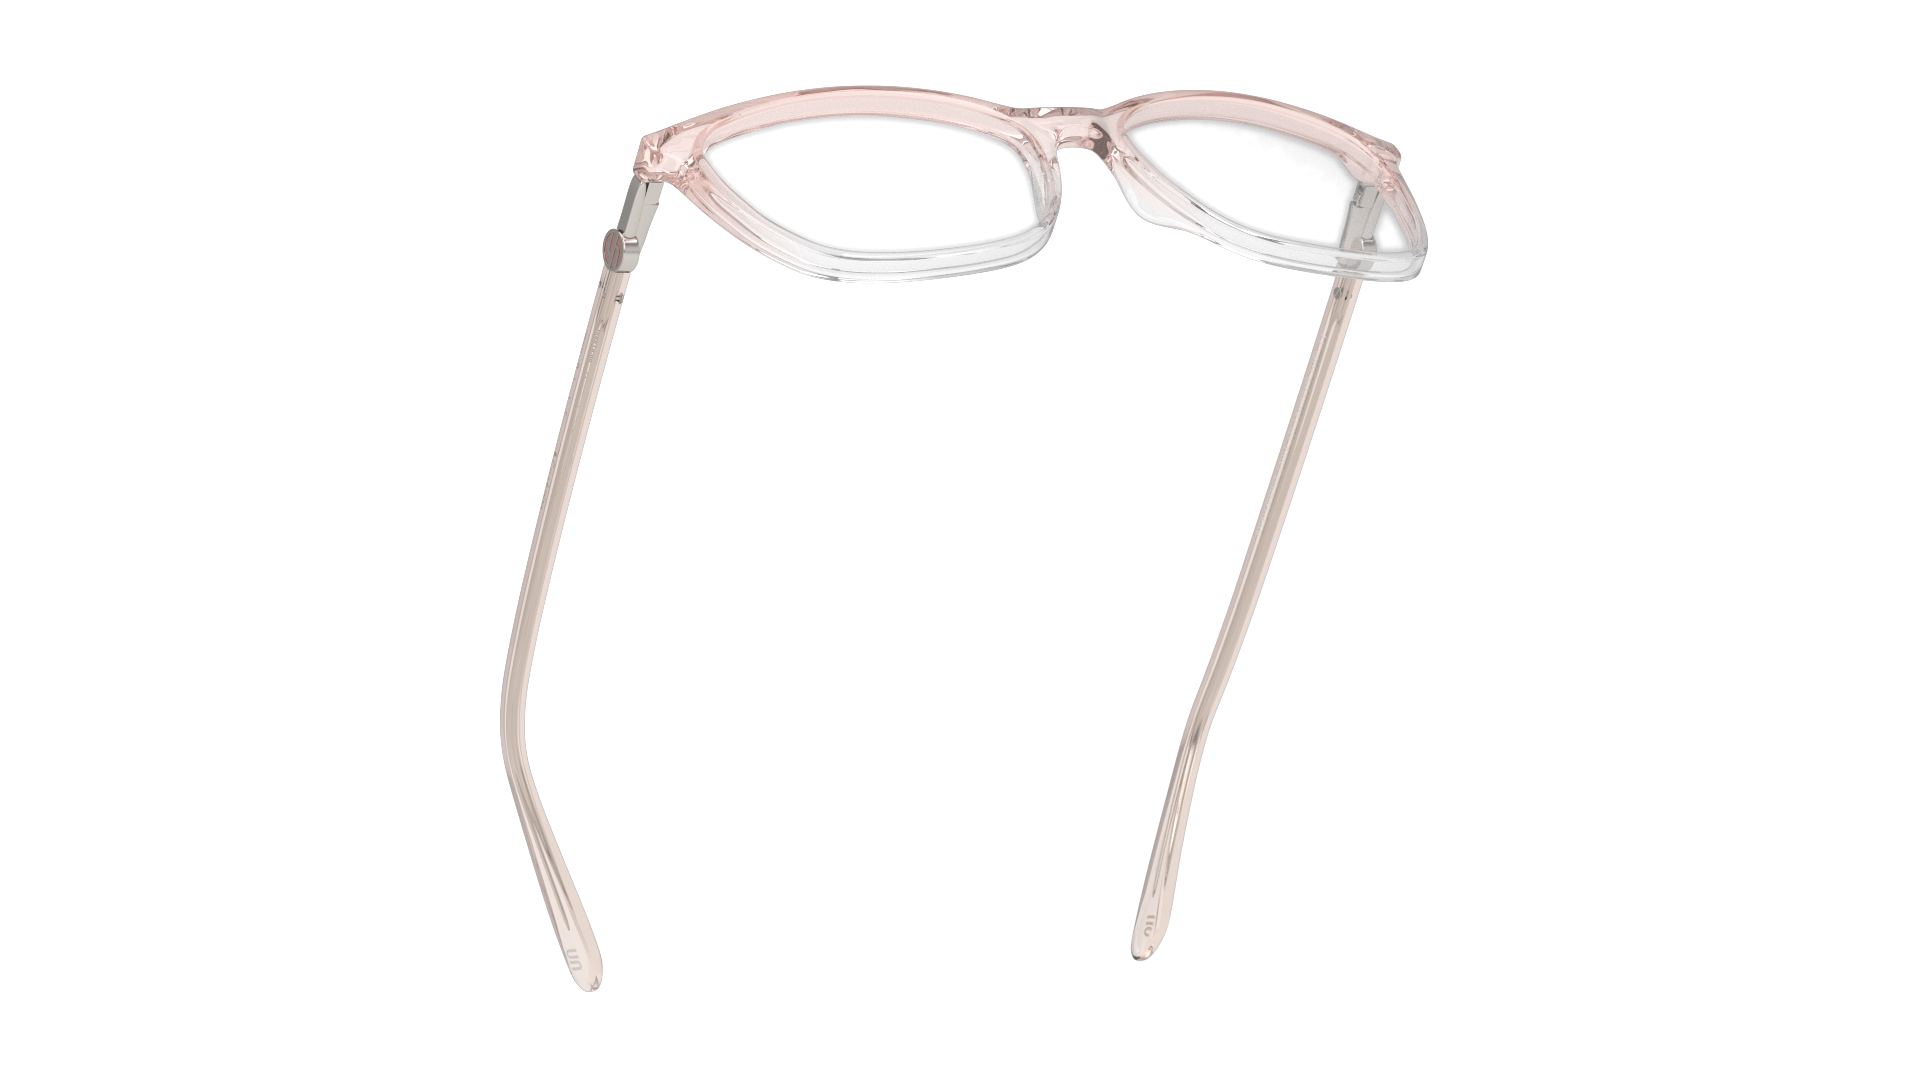 Bottom_Up Unofficial UNOF0429 Glasses Transparent / Transparent, Pink